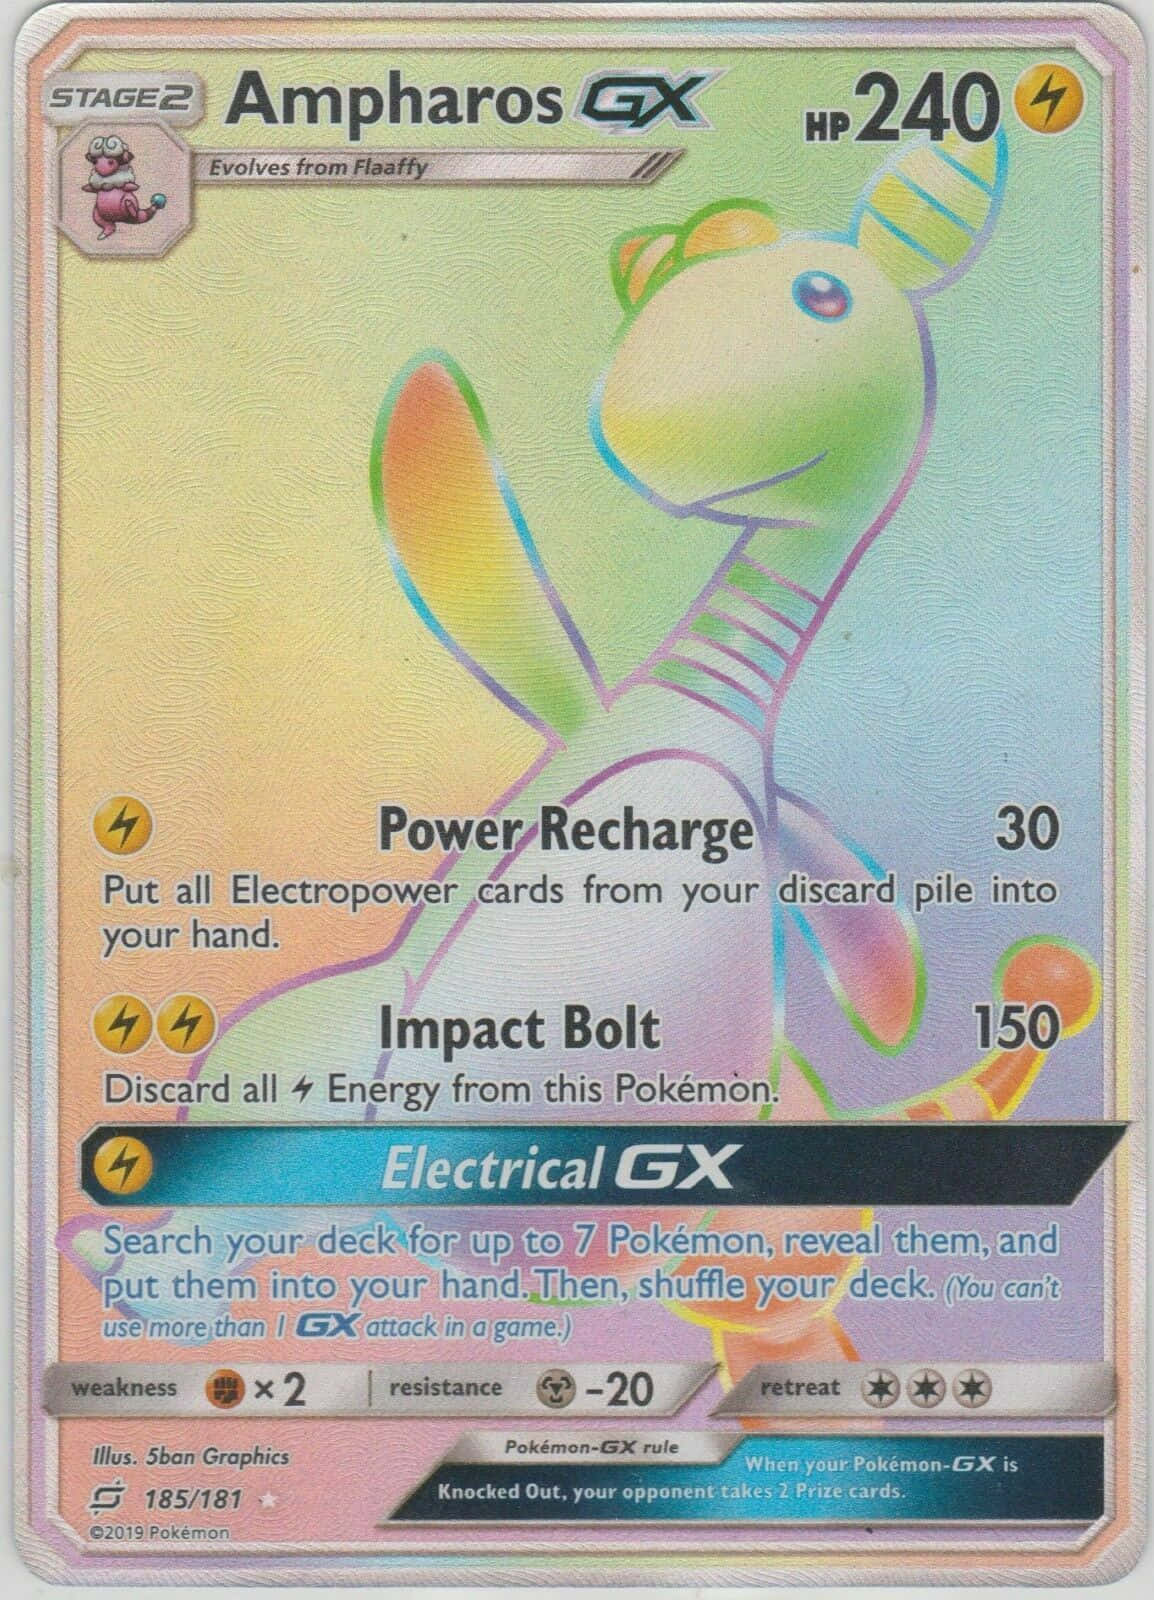 Ampharos Pokémon Card Background